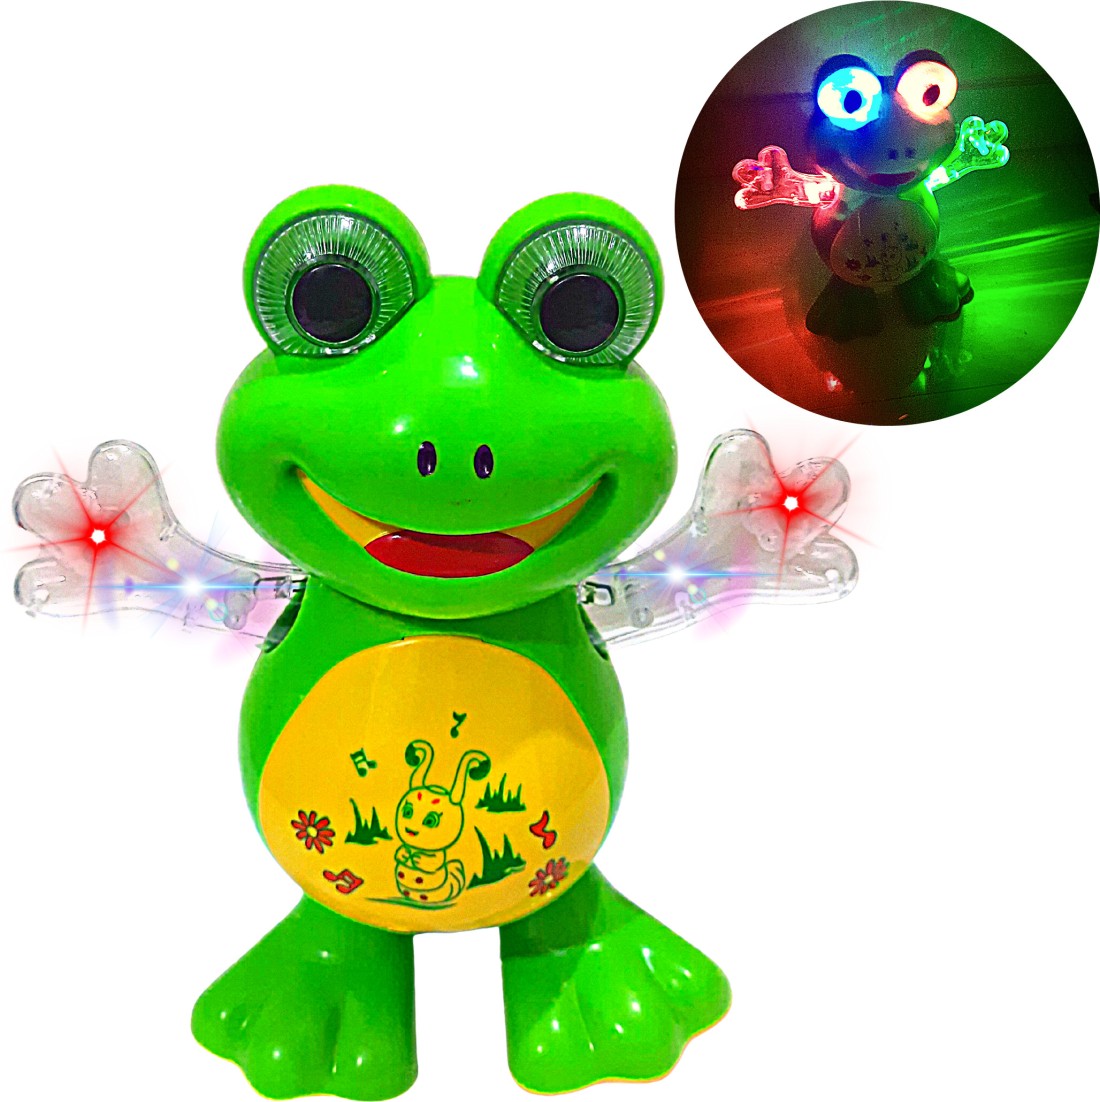 Kart In Box, Frog Toys For Kids, Dancing Frog, Indoor Games For Kids, Game For Kids -, Frog Toys For Kids, Dancing Frog